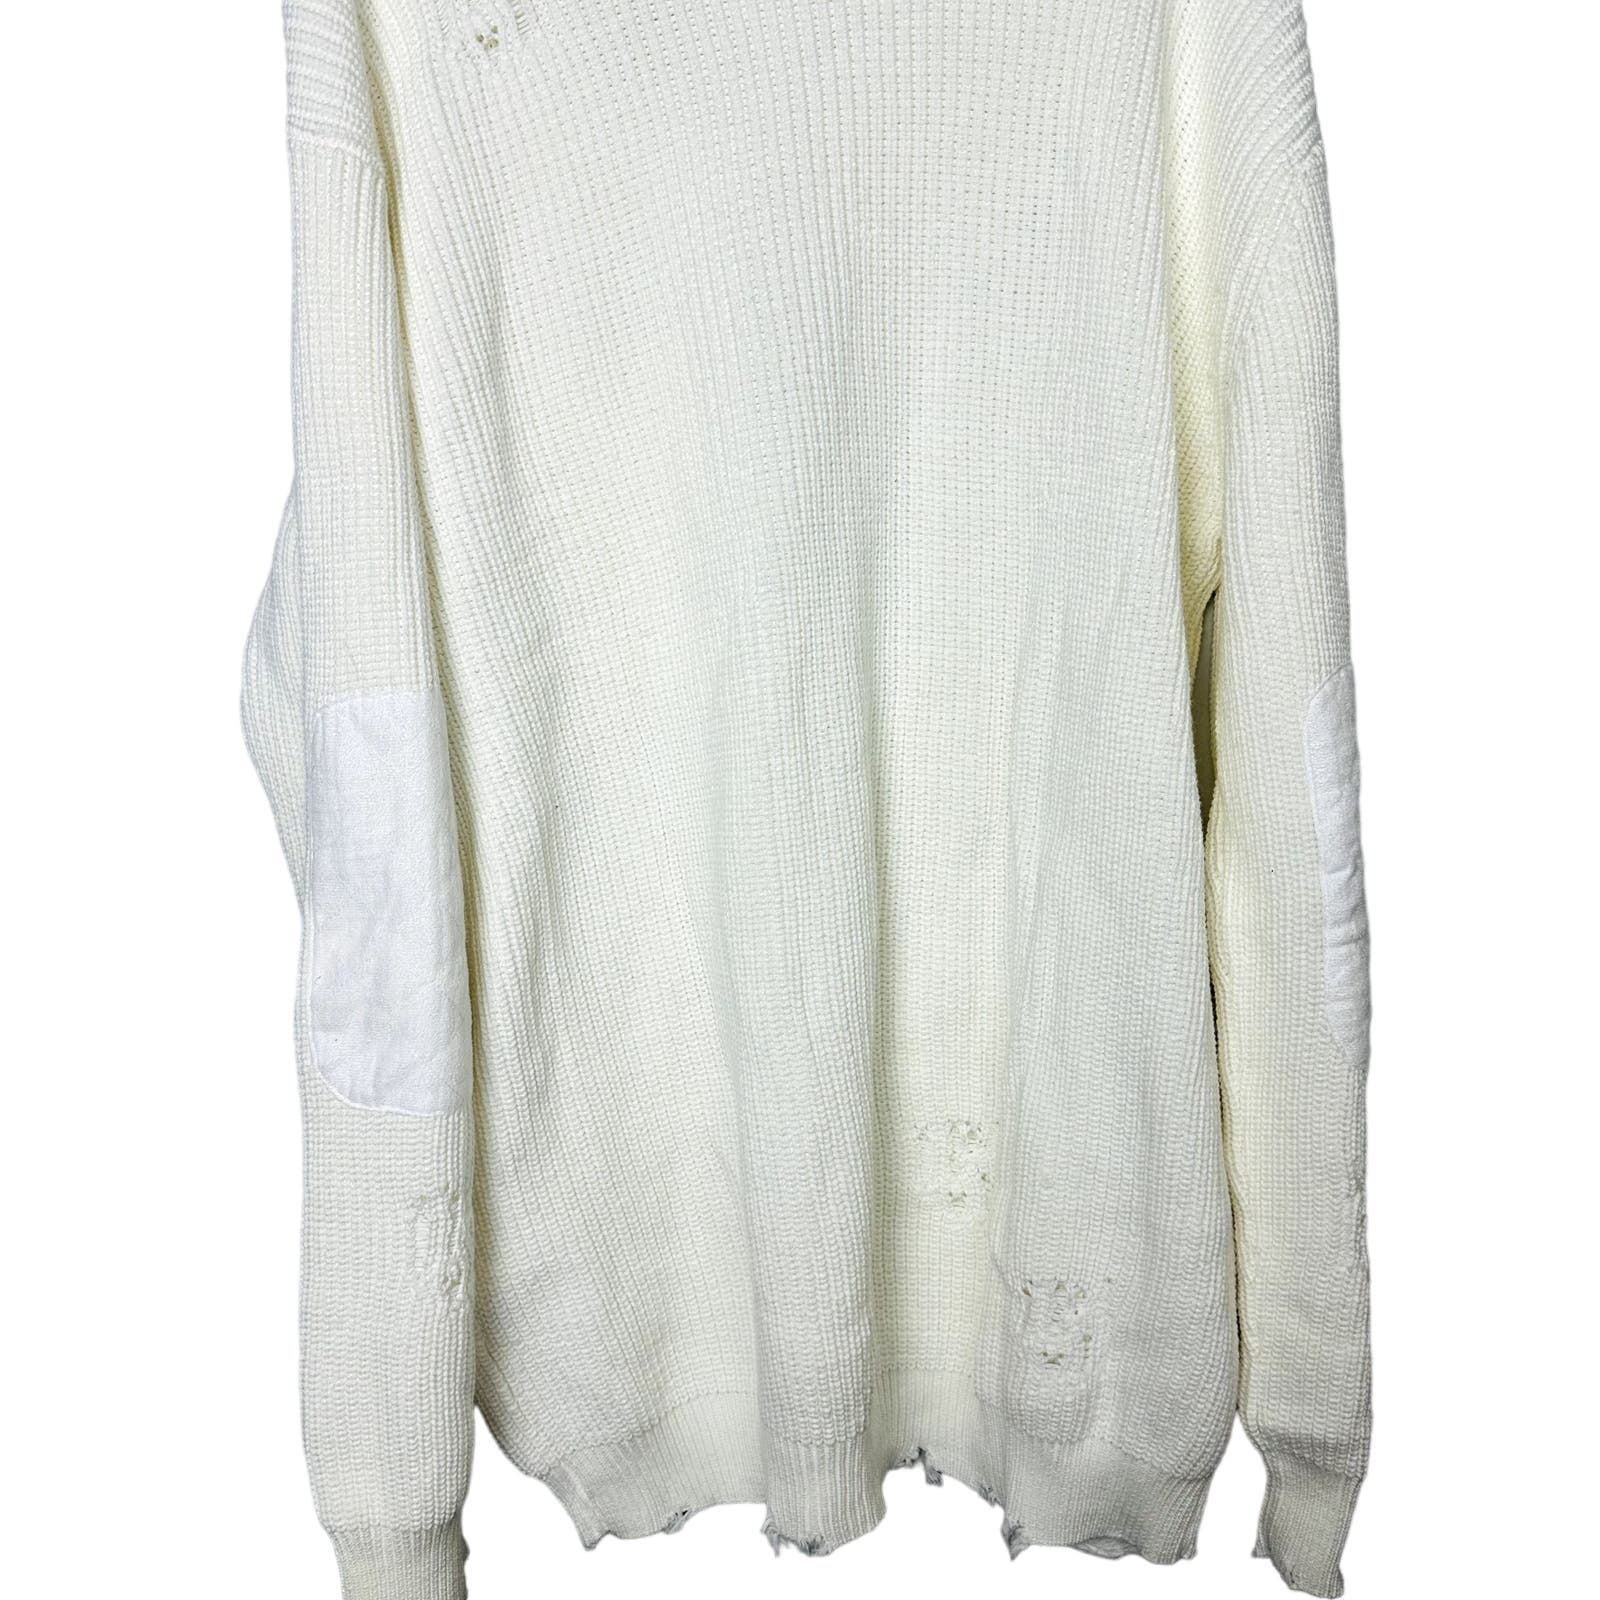 Ser.O.Ya NWT Revolve White Distressed Devin Crew Neck Sweater Dress Size 2XL